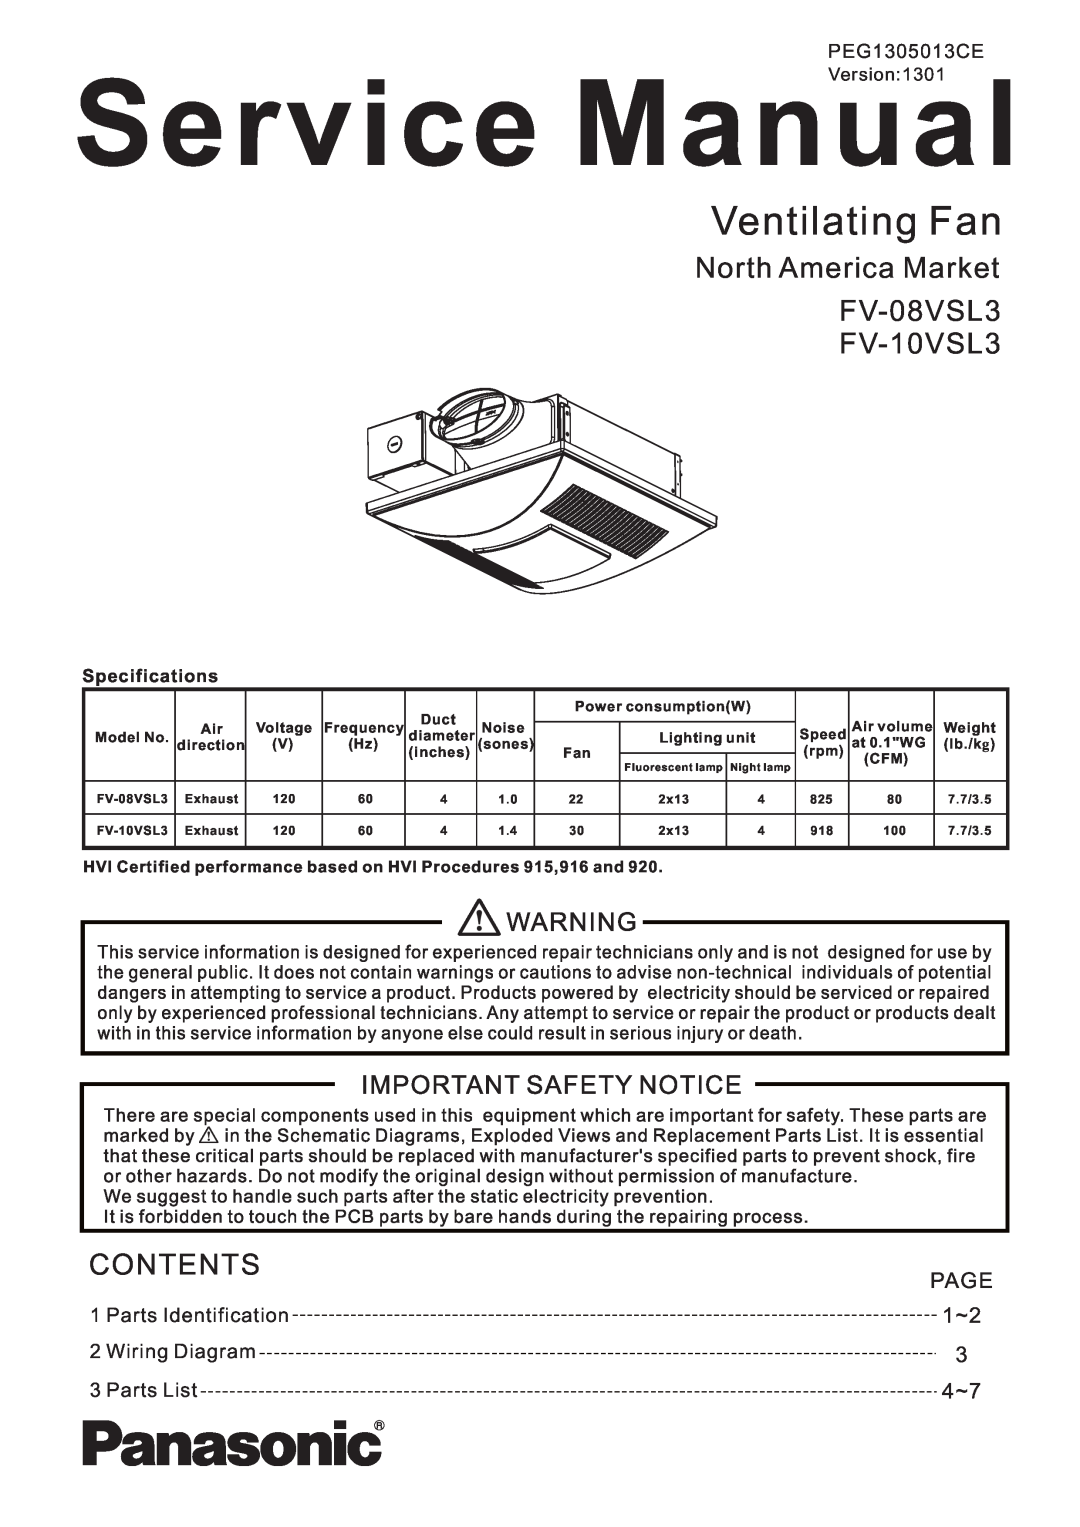 Panasonic service manual North America Market FV-08VSL3 FV-10VSL3, Contents, Ventilating Fan, Page, Wiring Diagram 